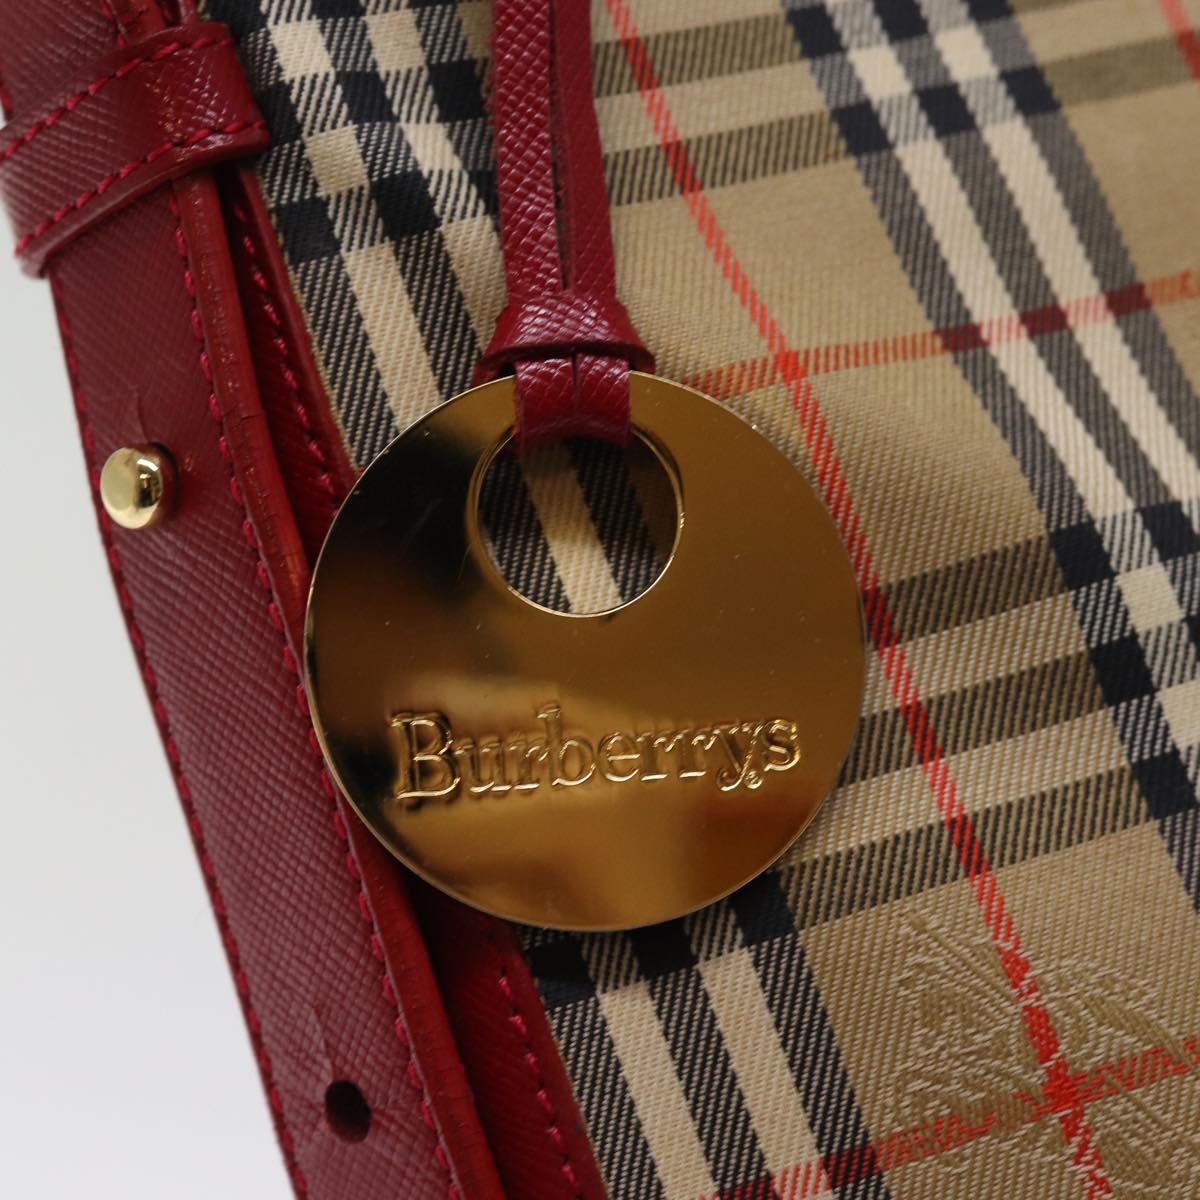 Burberrys Nova Check Shoulder Bag Canvas Beige Red Auth 74385